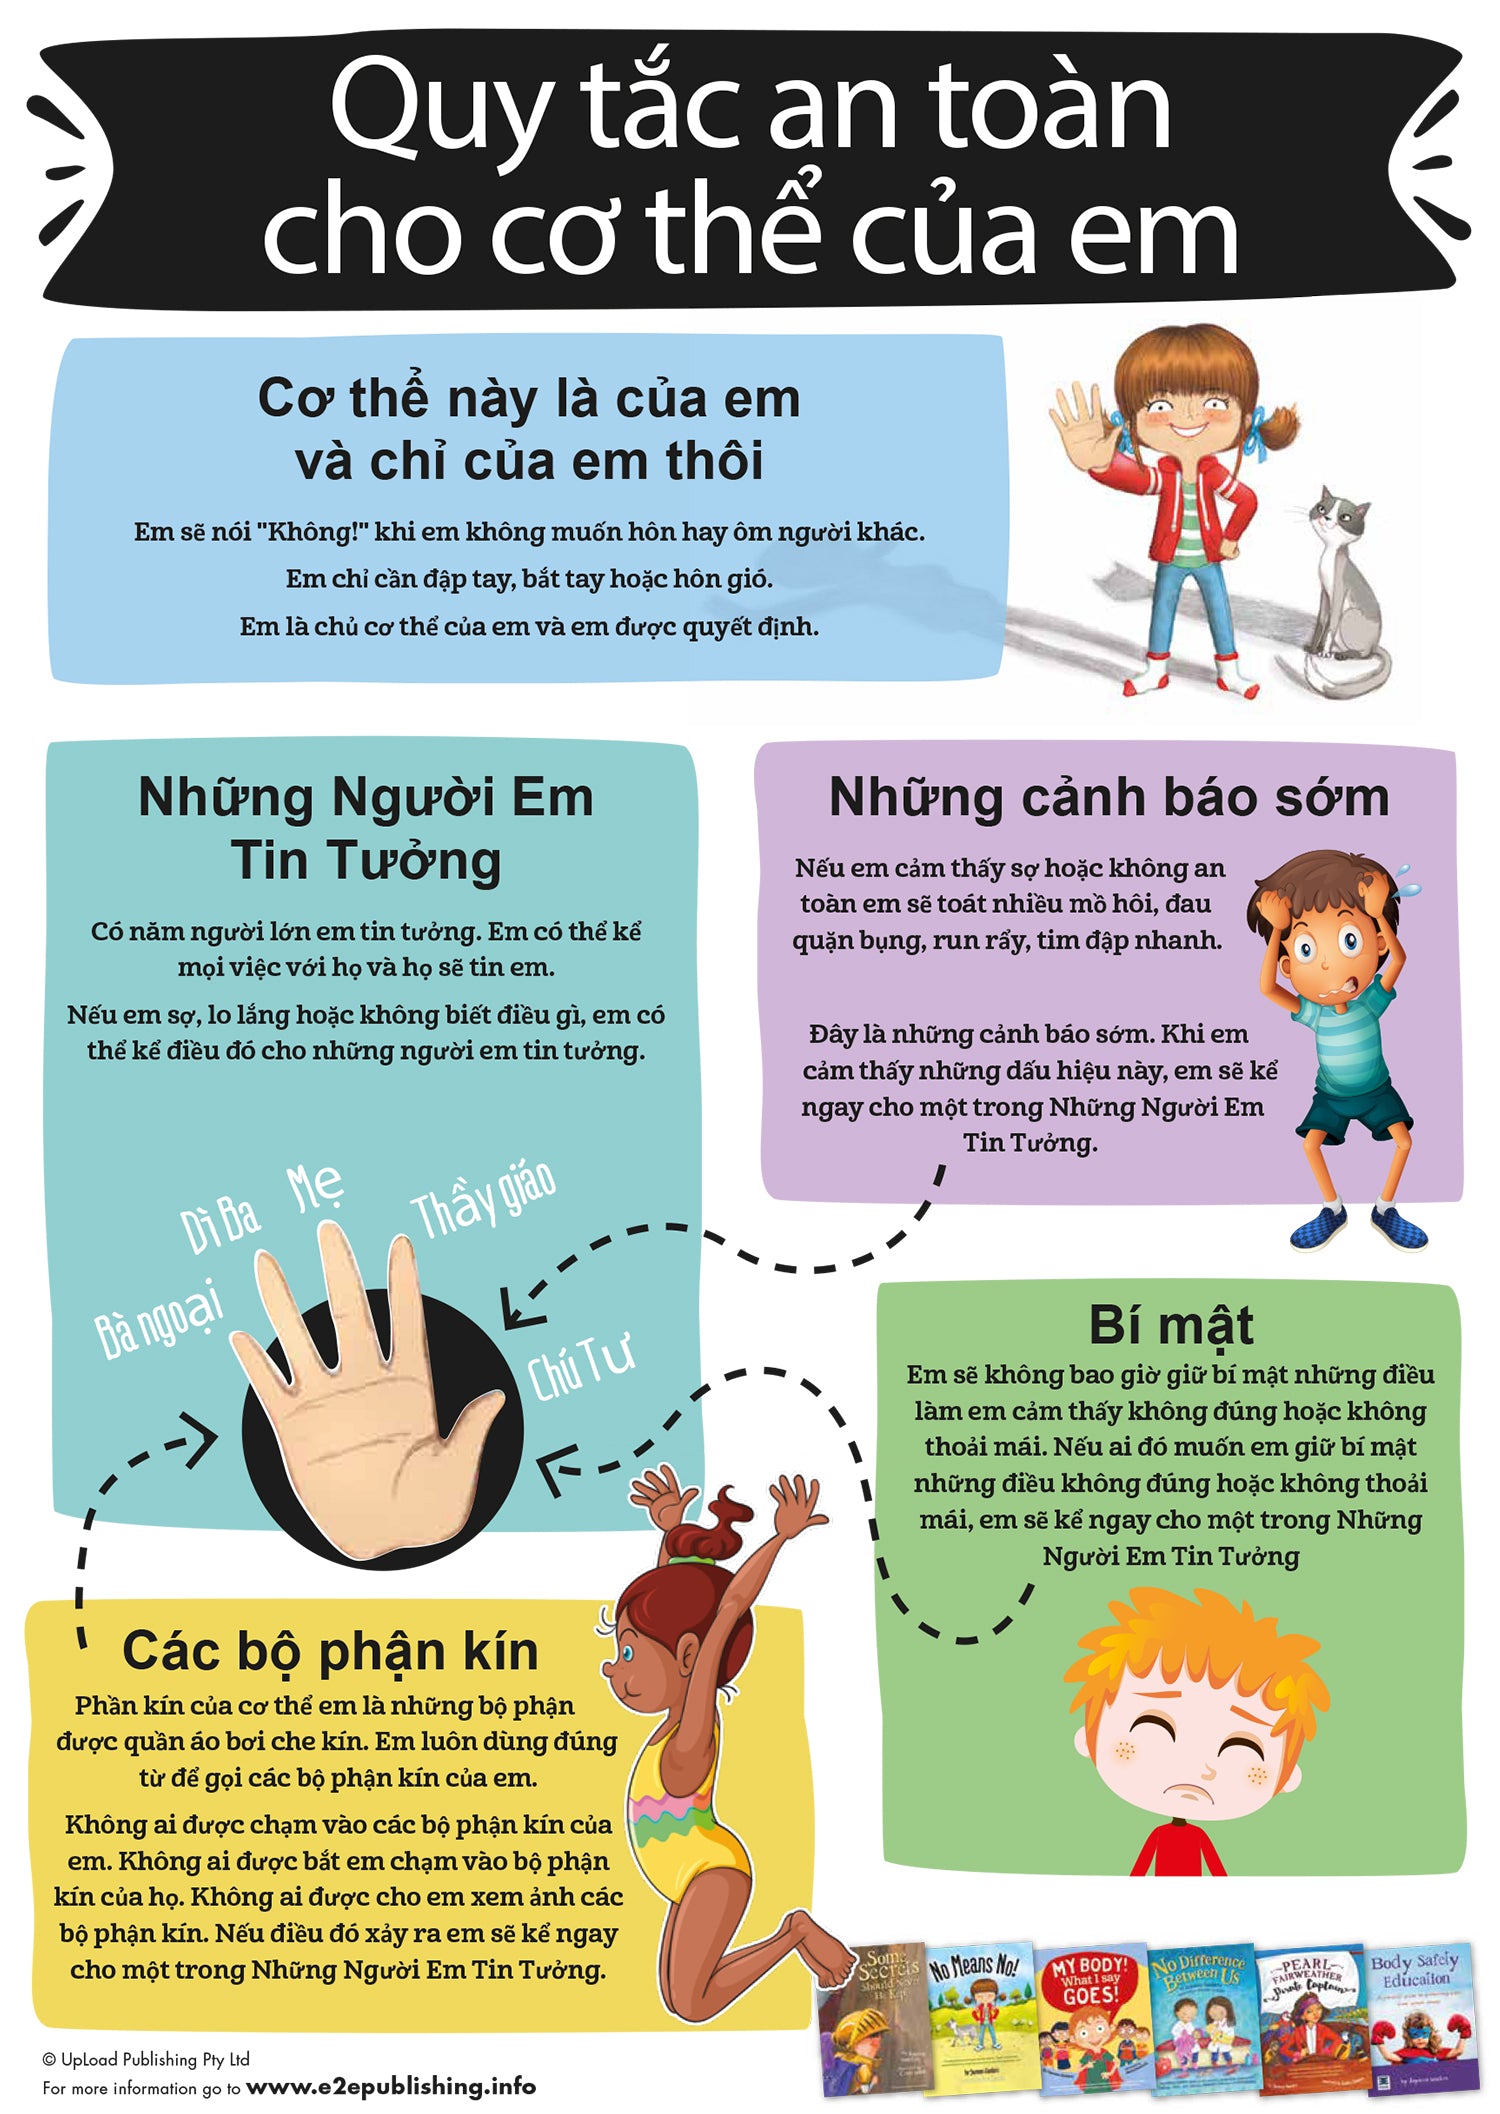 Body Safety Rules poster for children, written in Vietnamese.